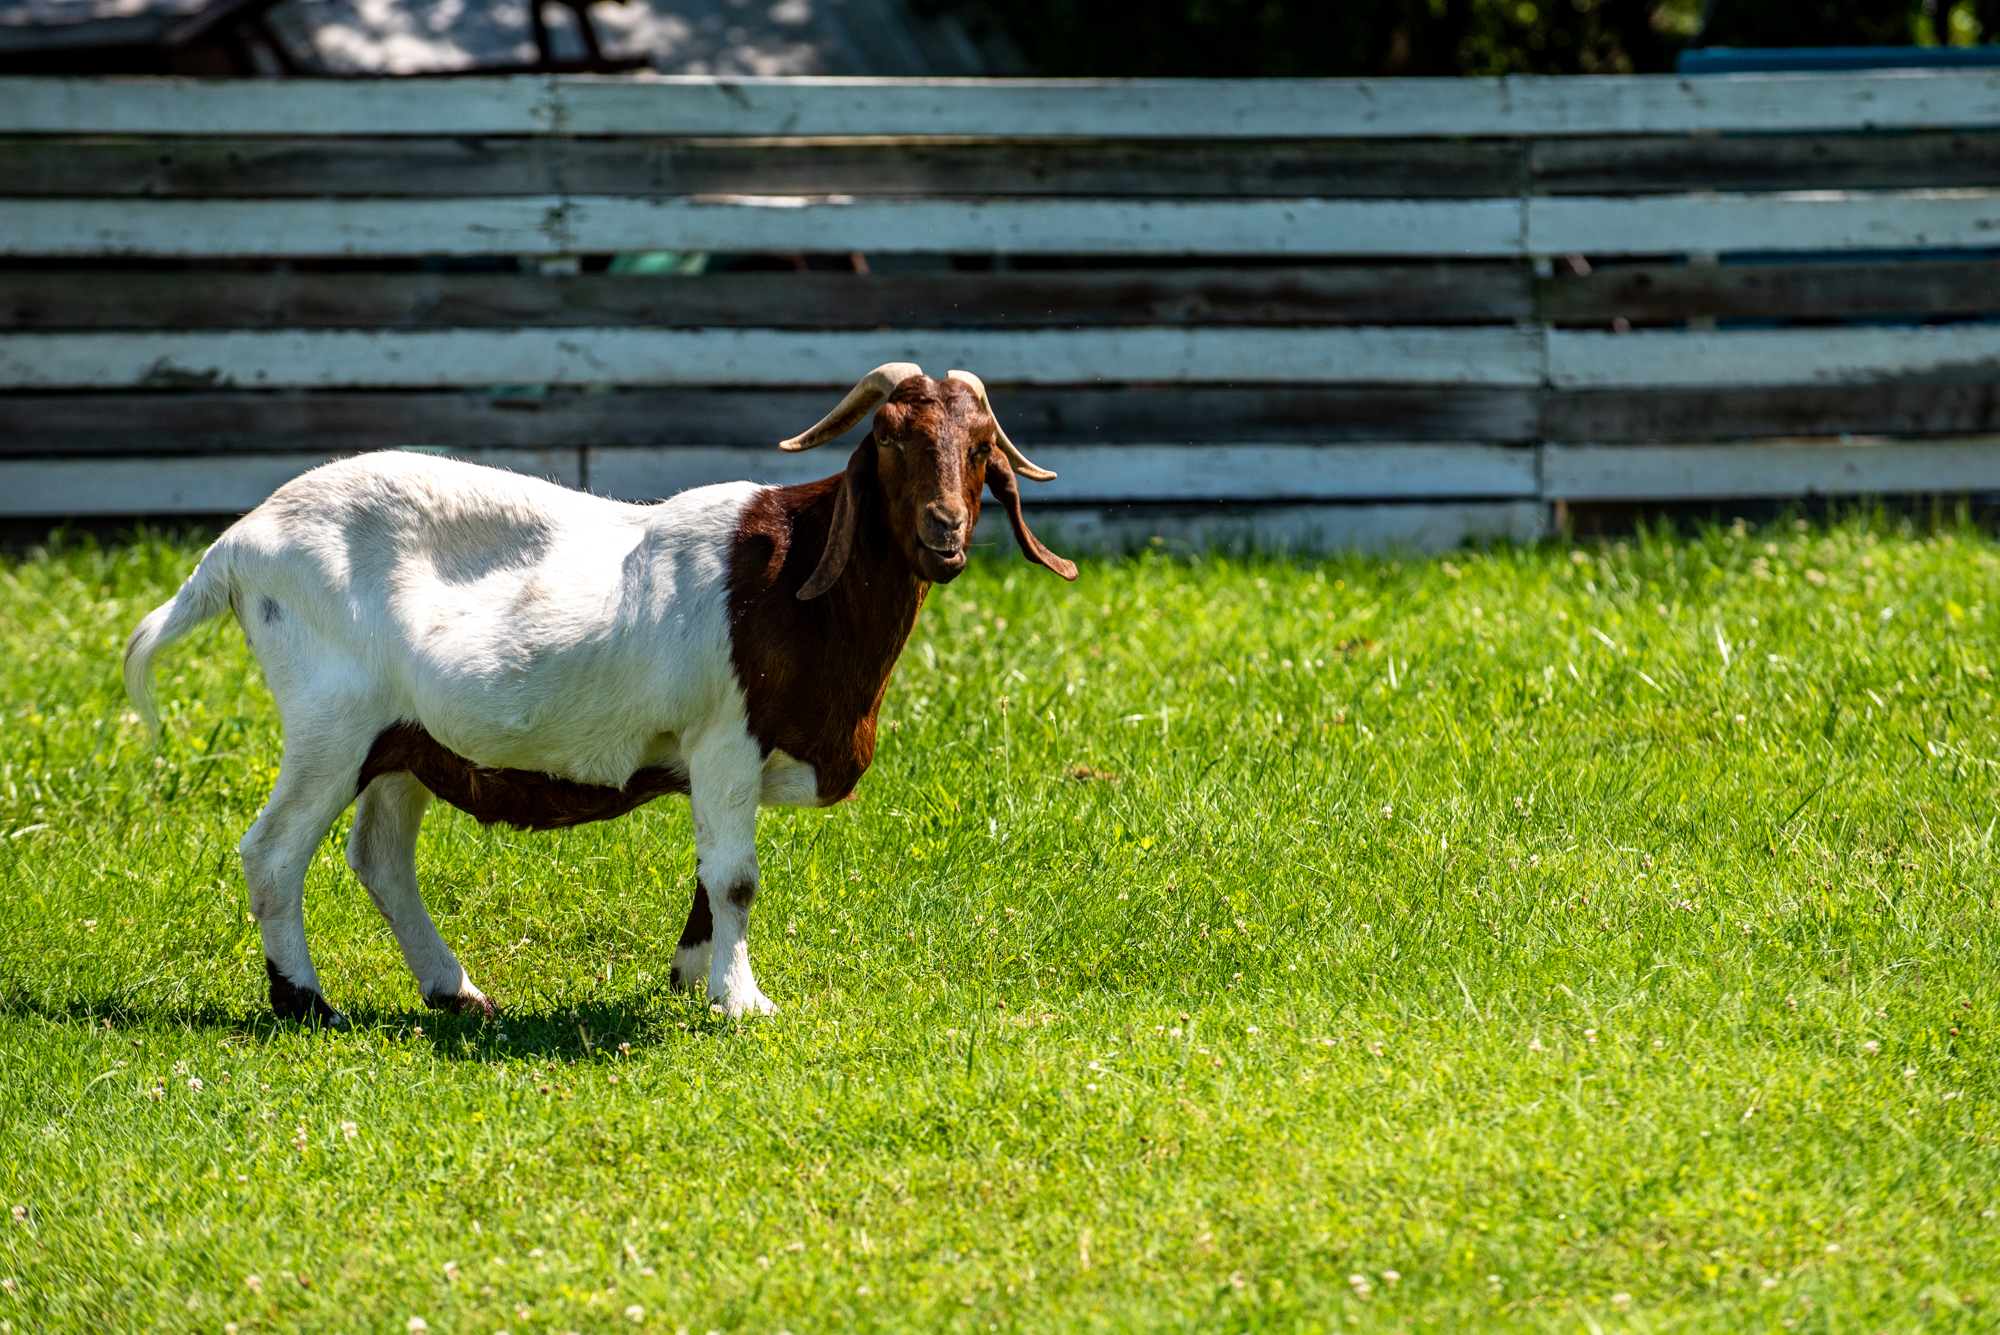 Camp Olympia wildlife - goat